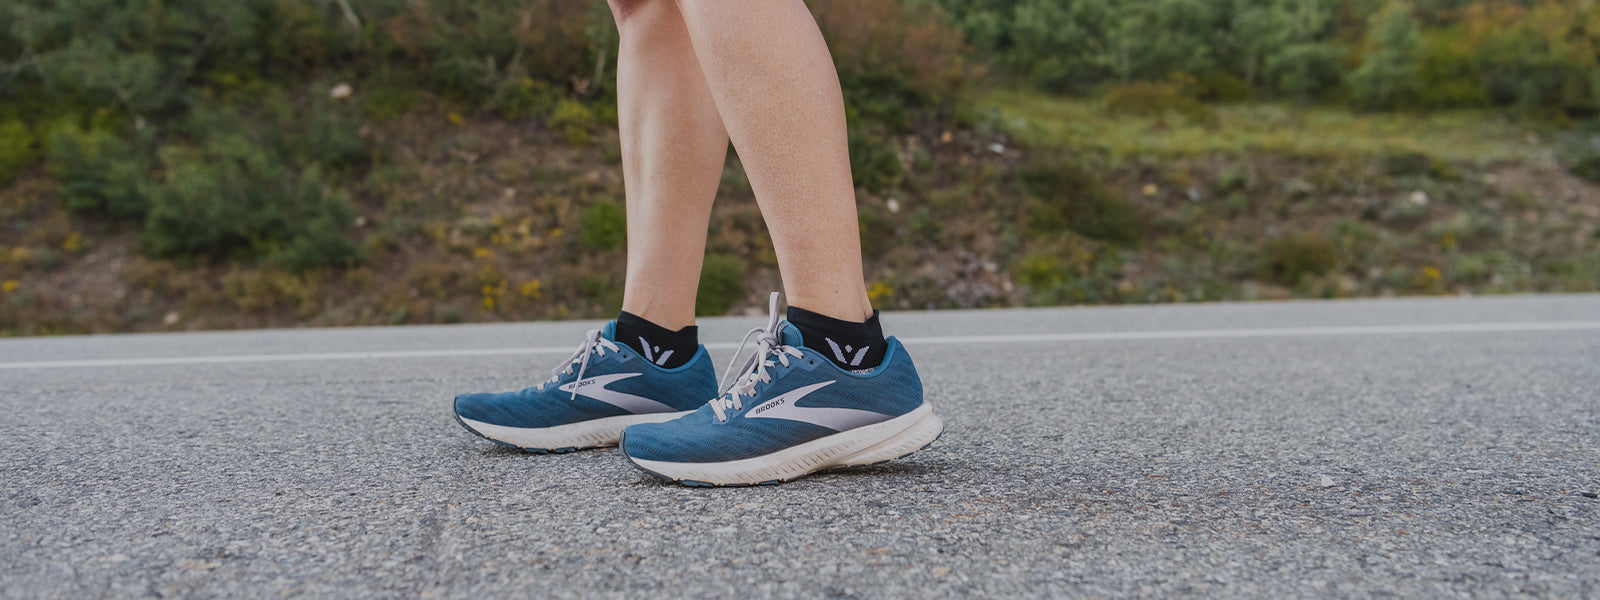 Woman running, wearing FLITE XT Zero socks